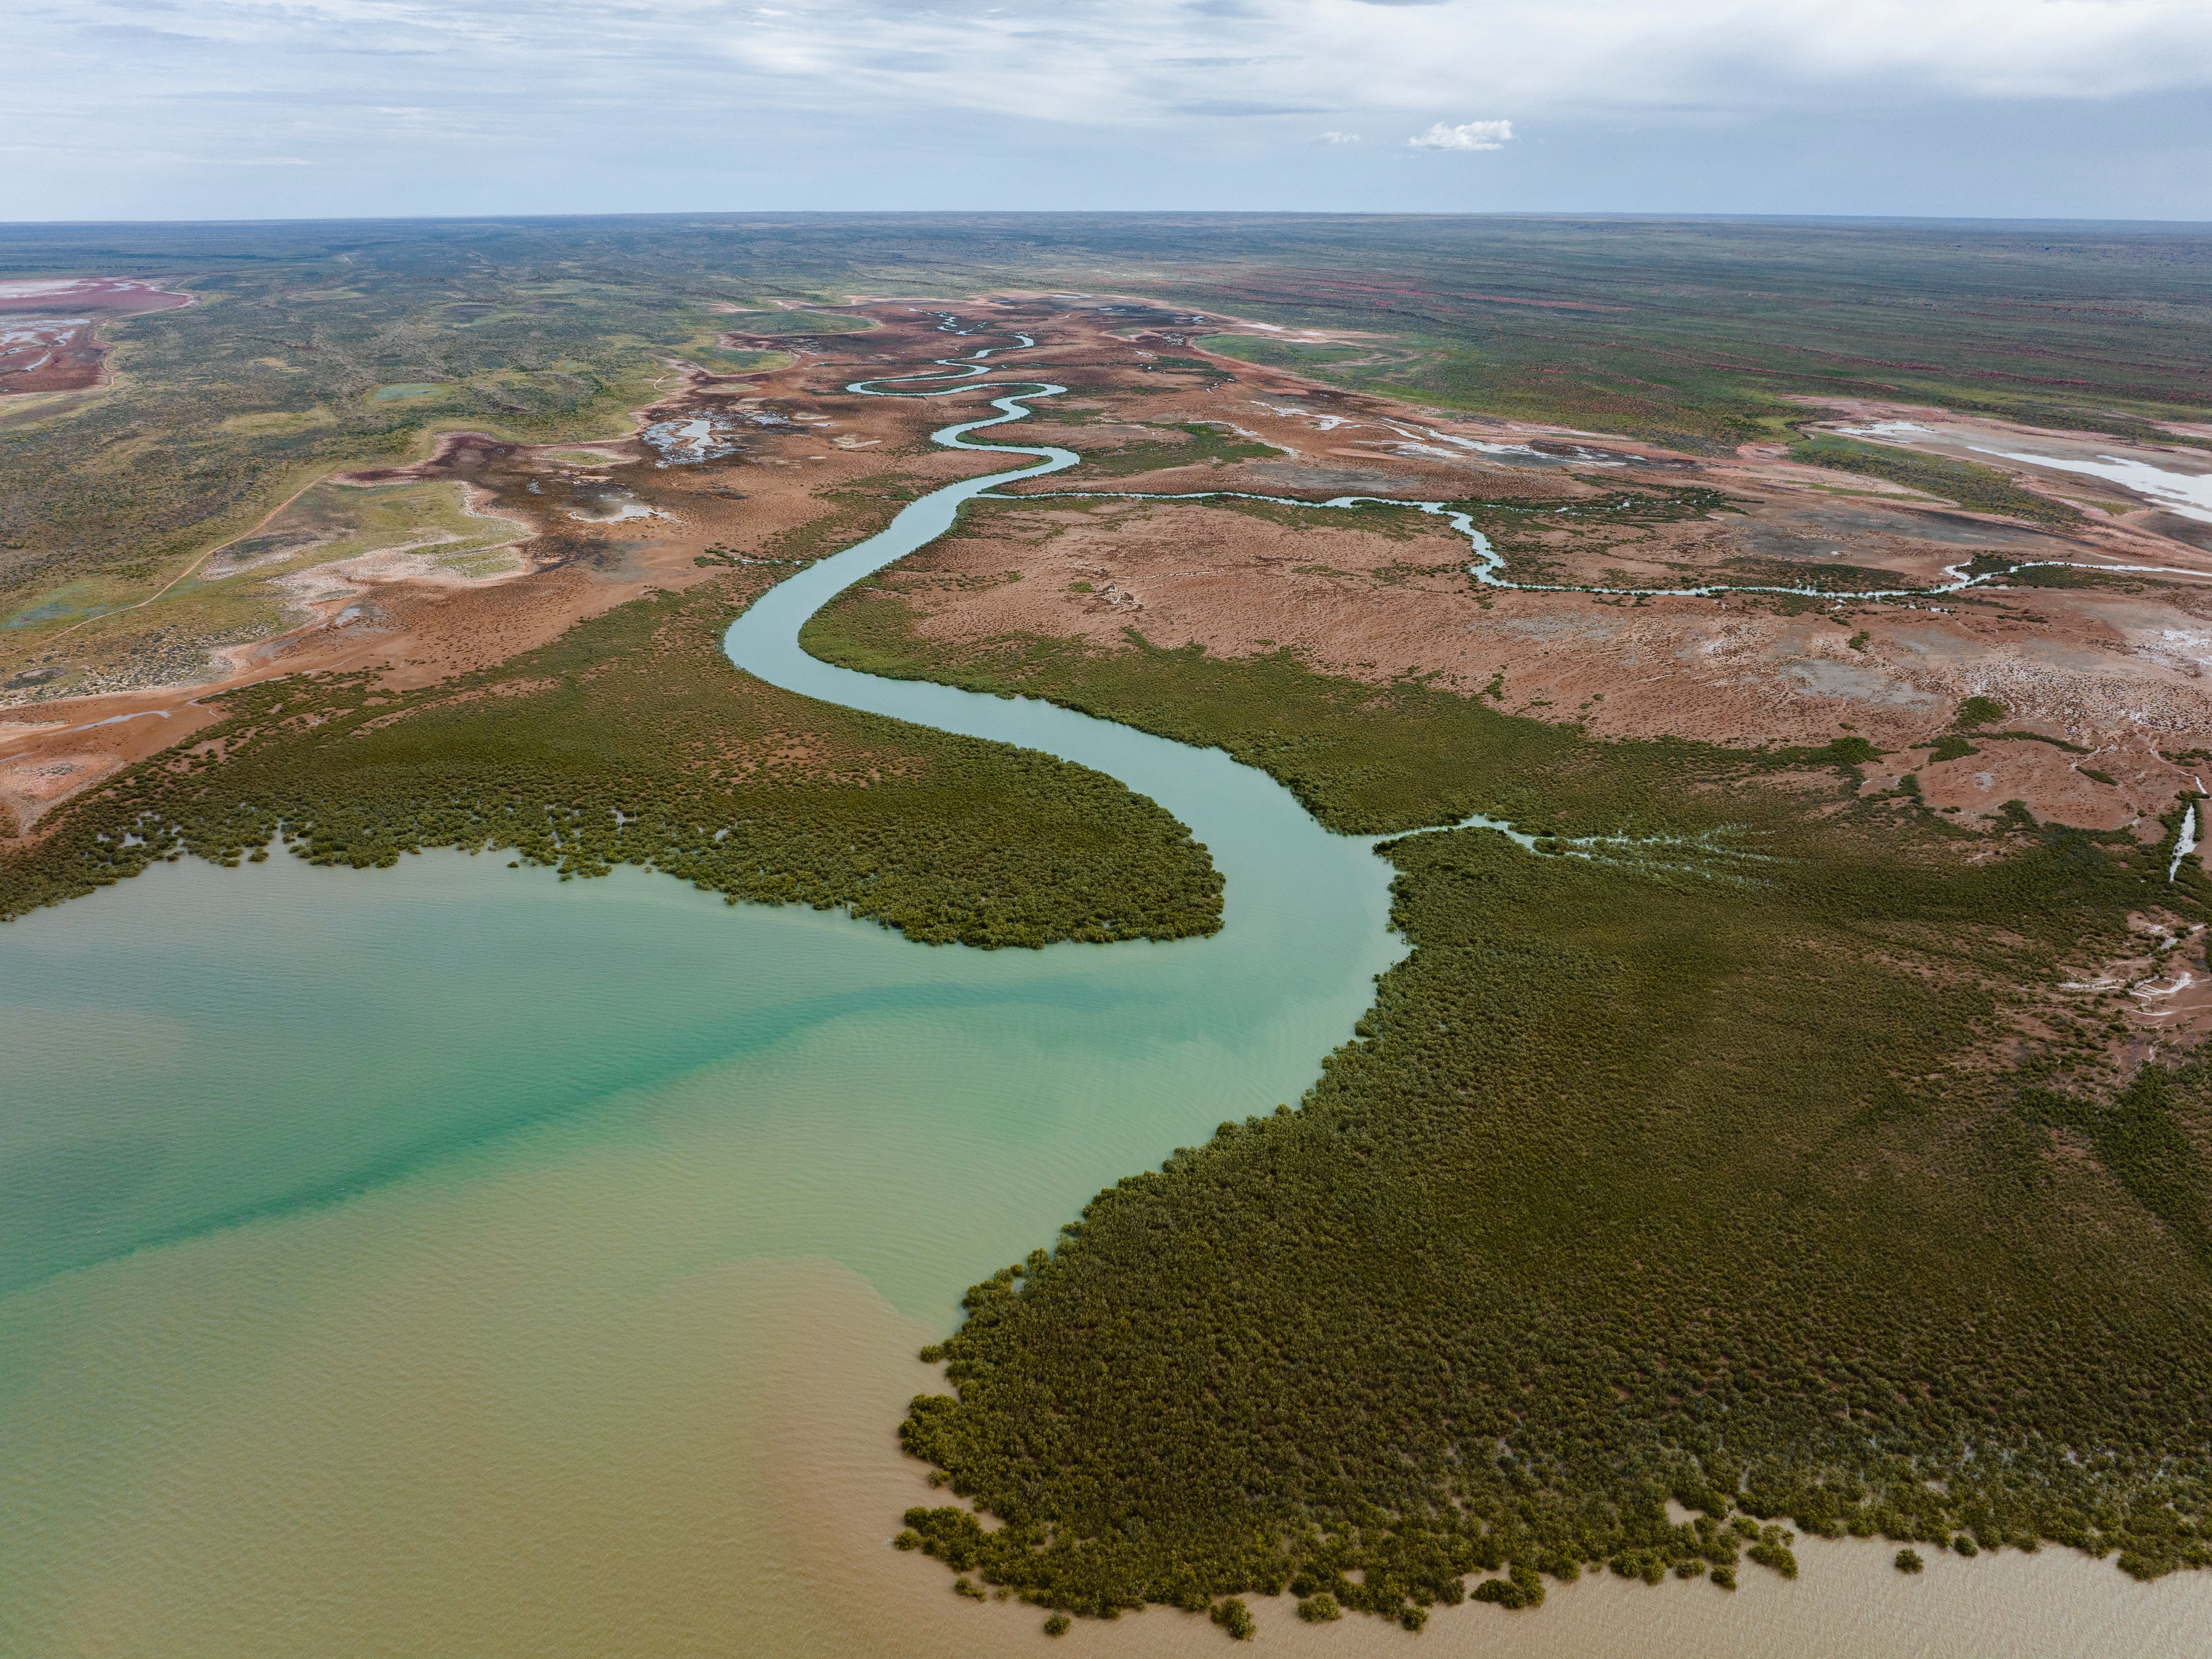 The coastal region edges onto the outback